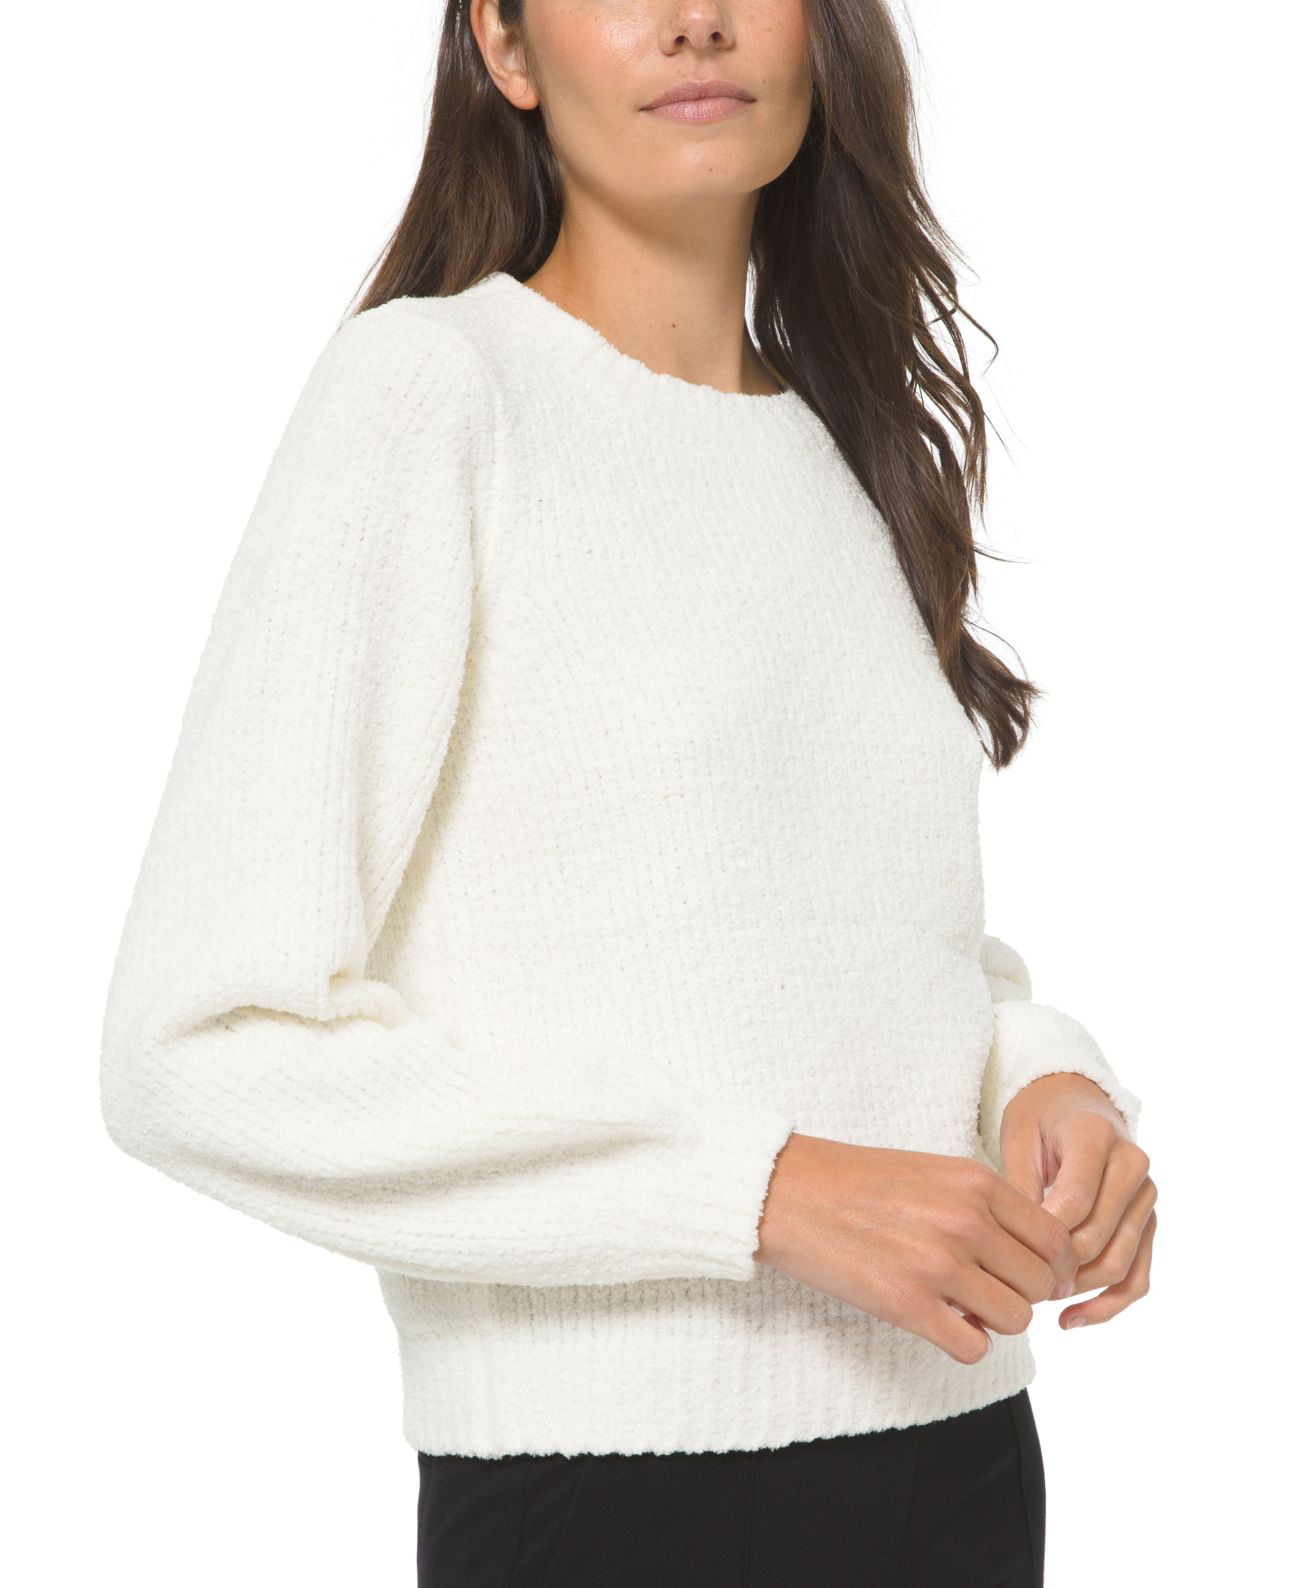 Michael Kors Puff-Sleeve Sweater, & Petite Sizes (White, Large) - Walmart.com